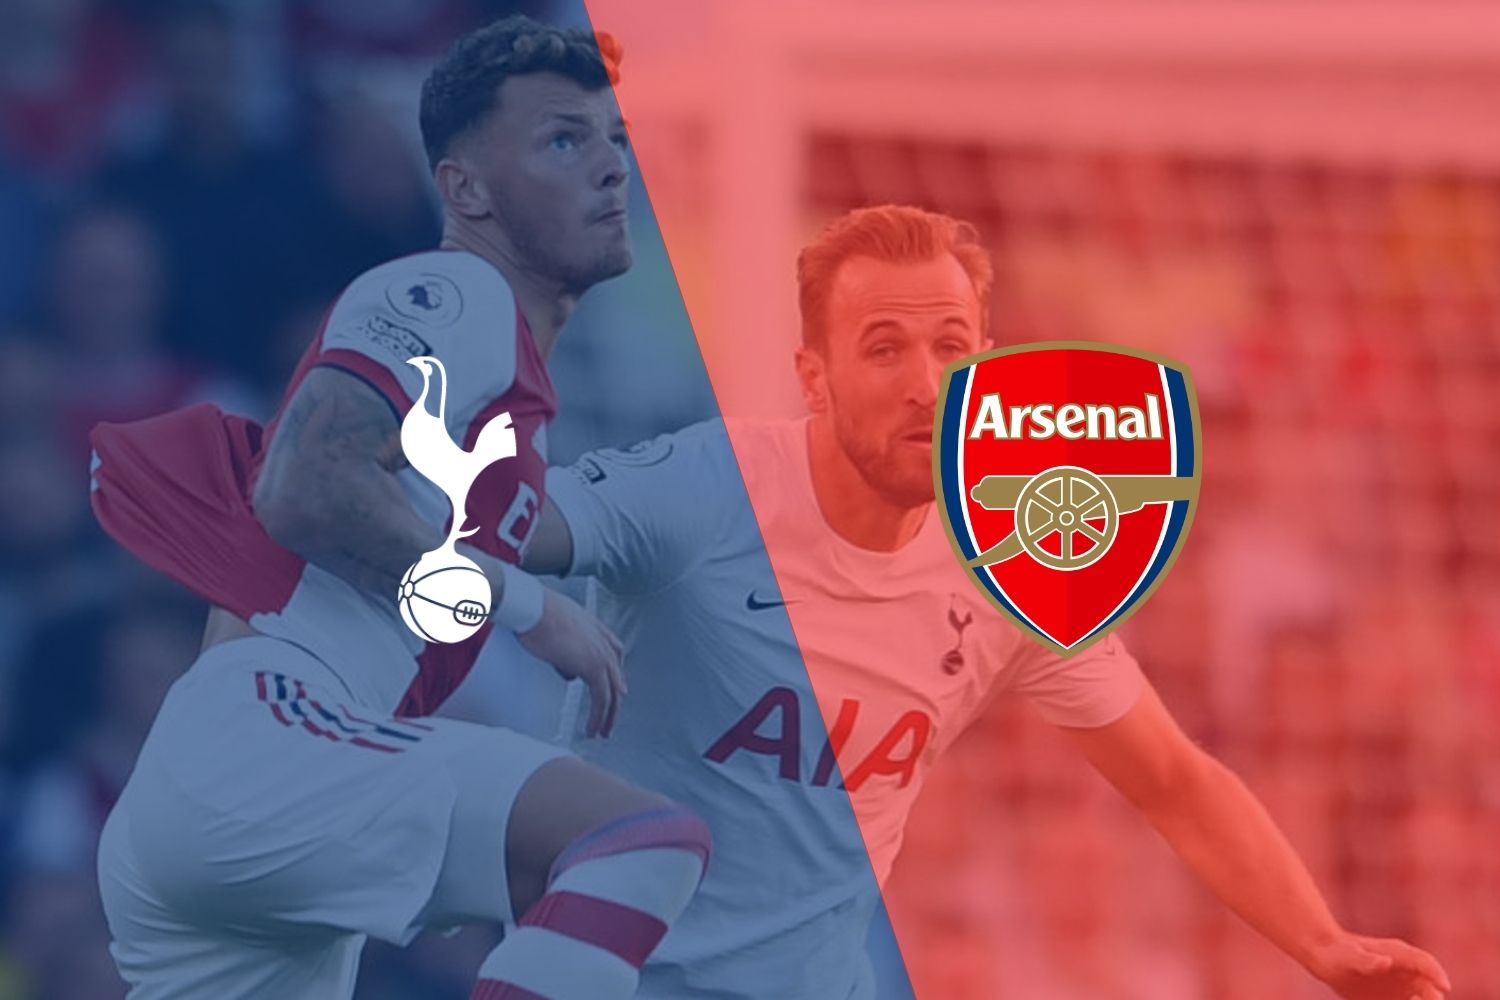 Tottenham vs Arsenal preview and betting prediction